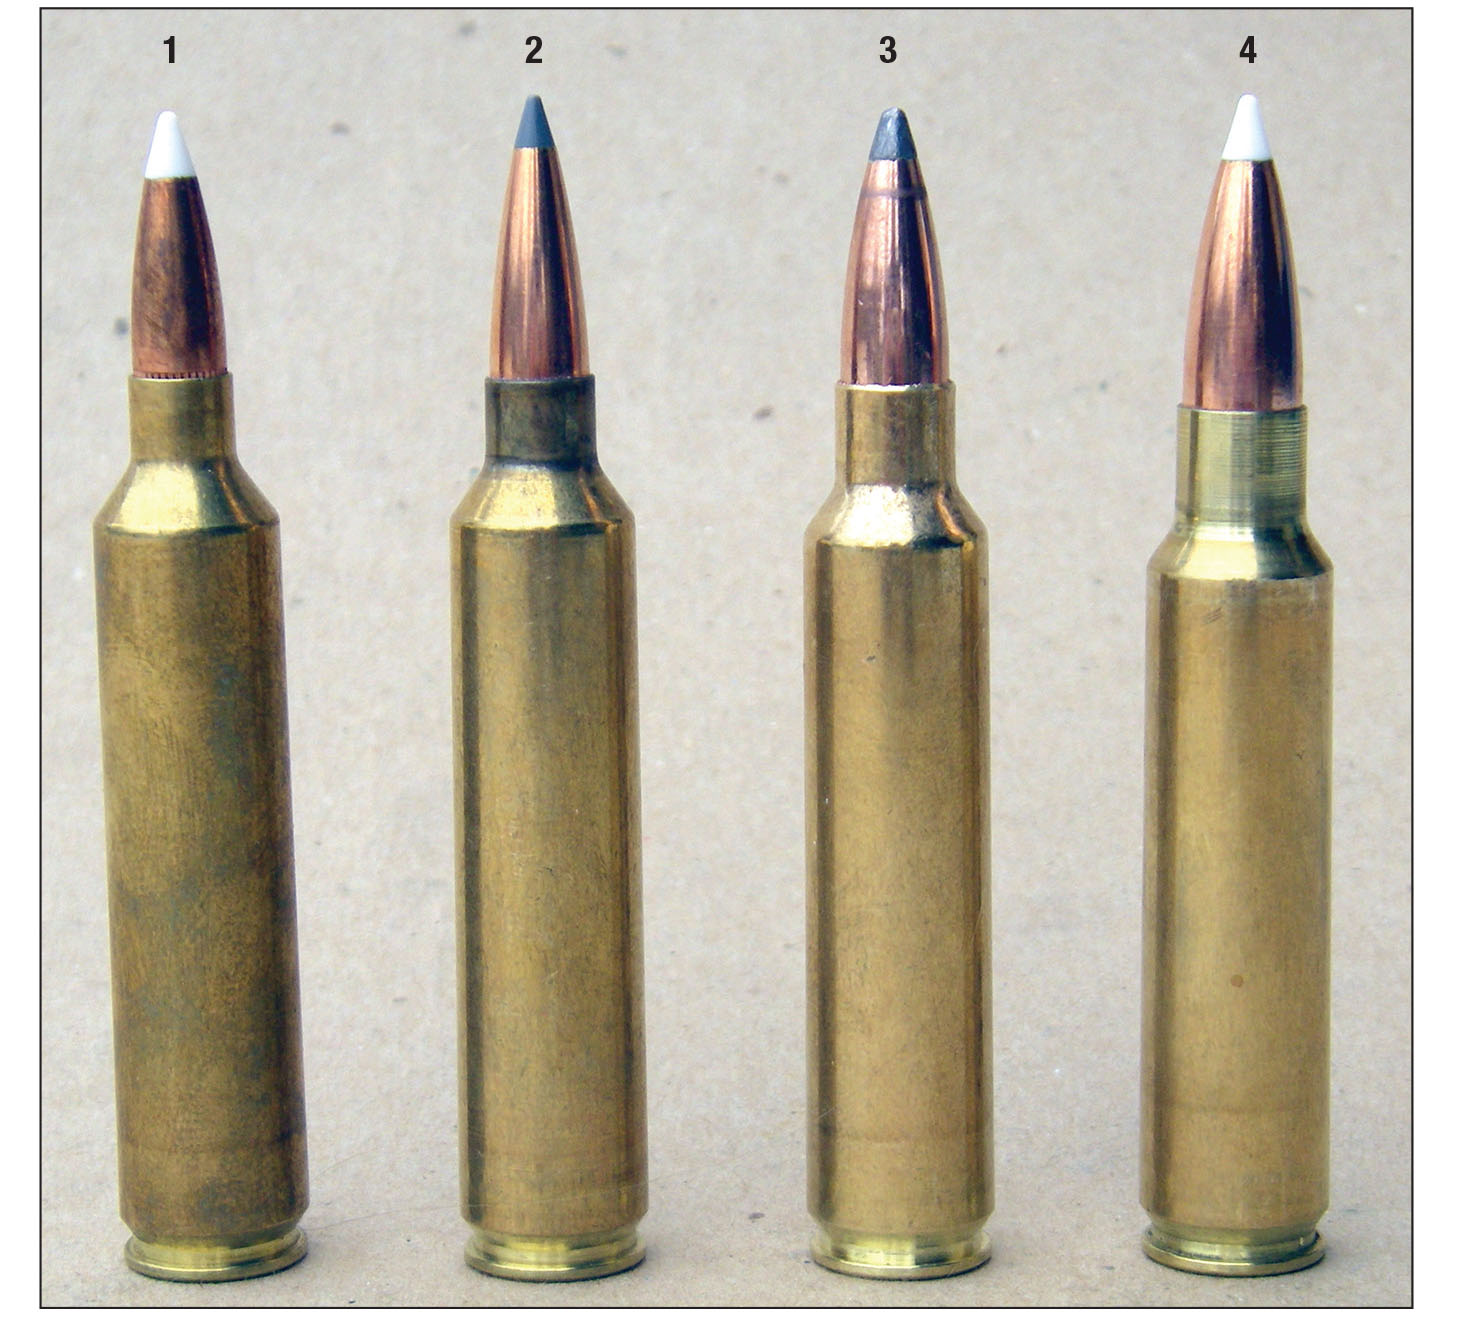 30 Nosler ammunition